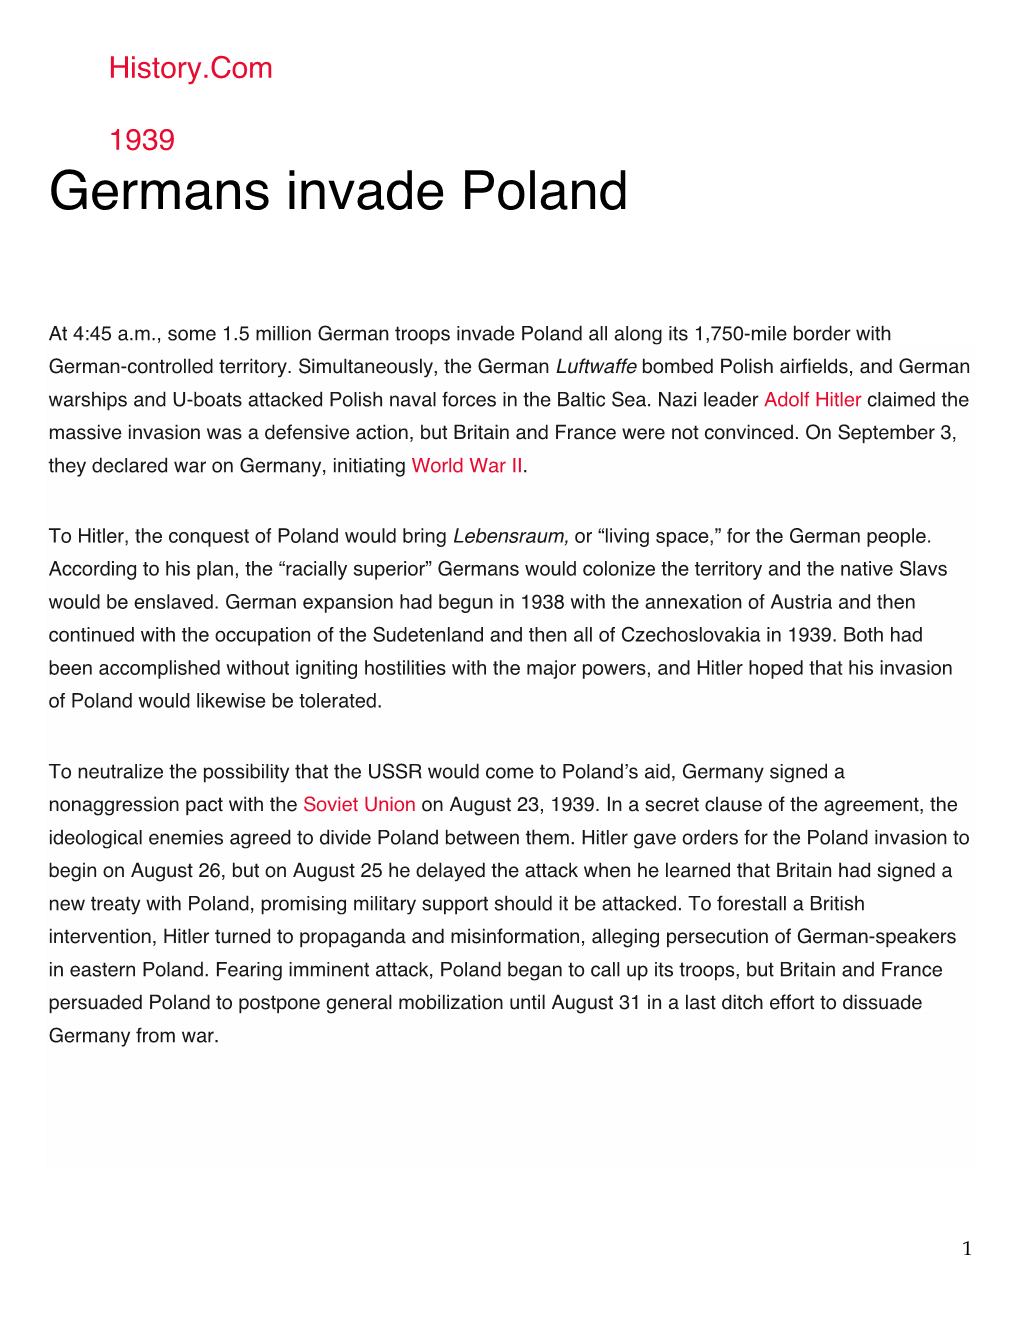 Germans Invade Poland